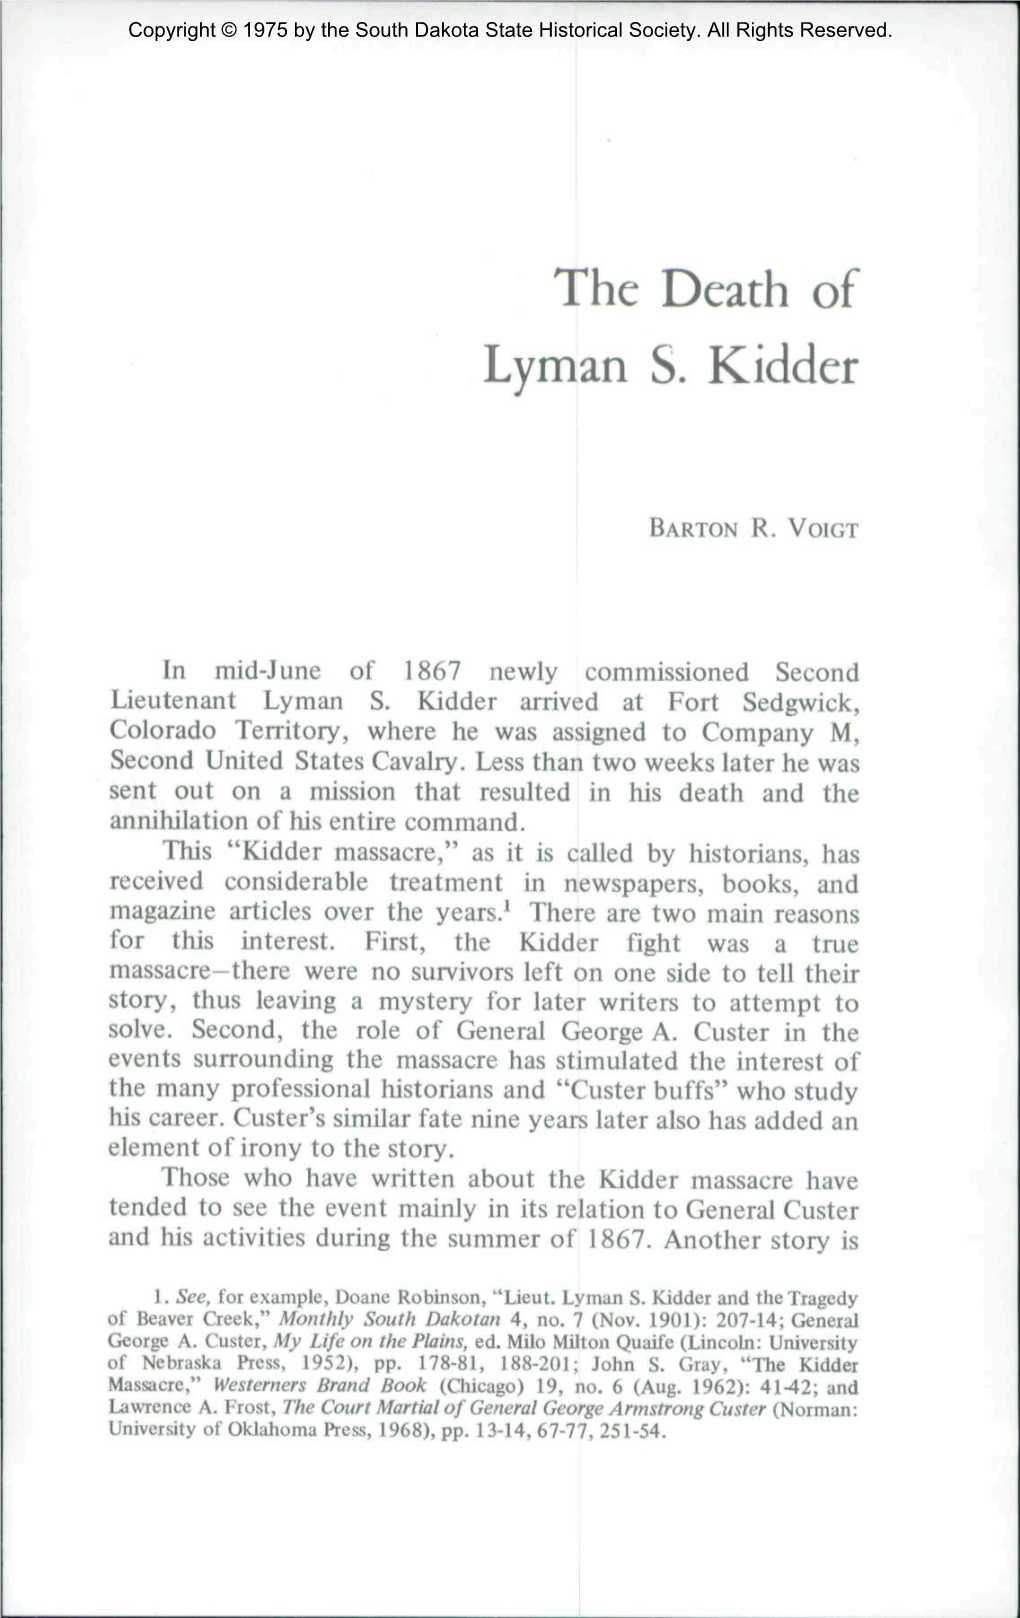 The Death of Lyman S. Kidder